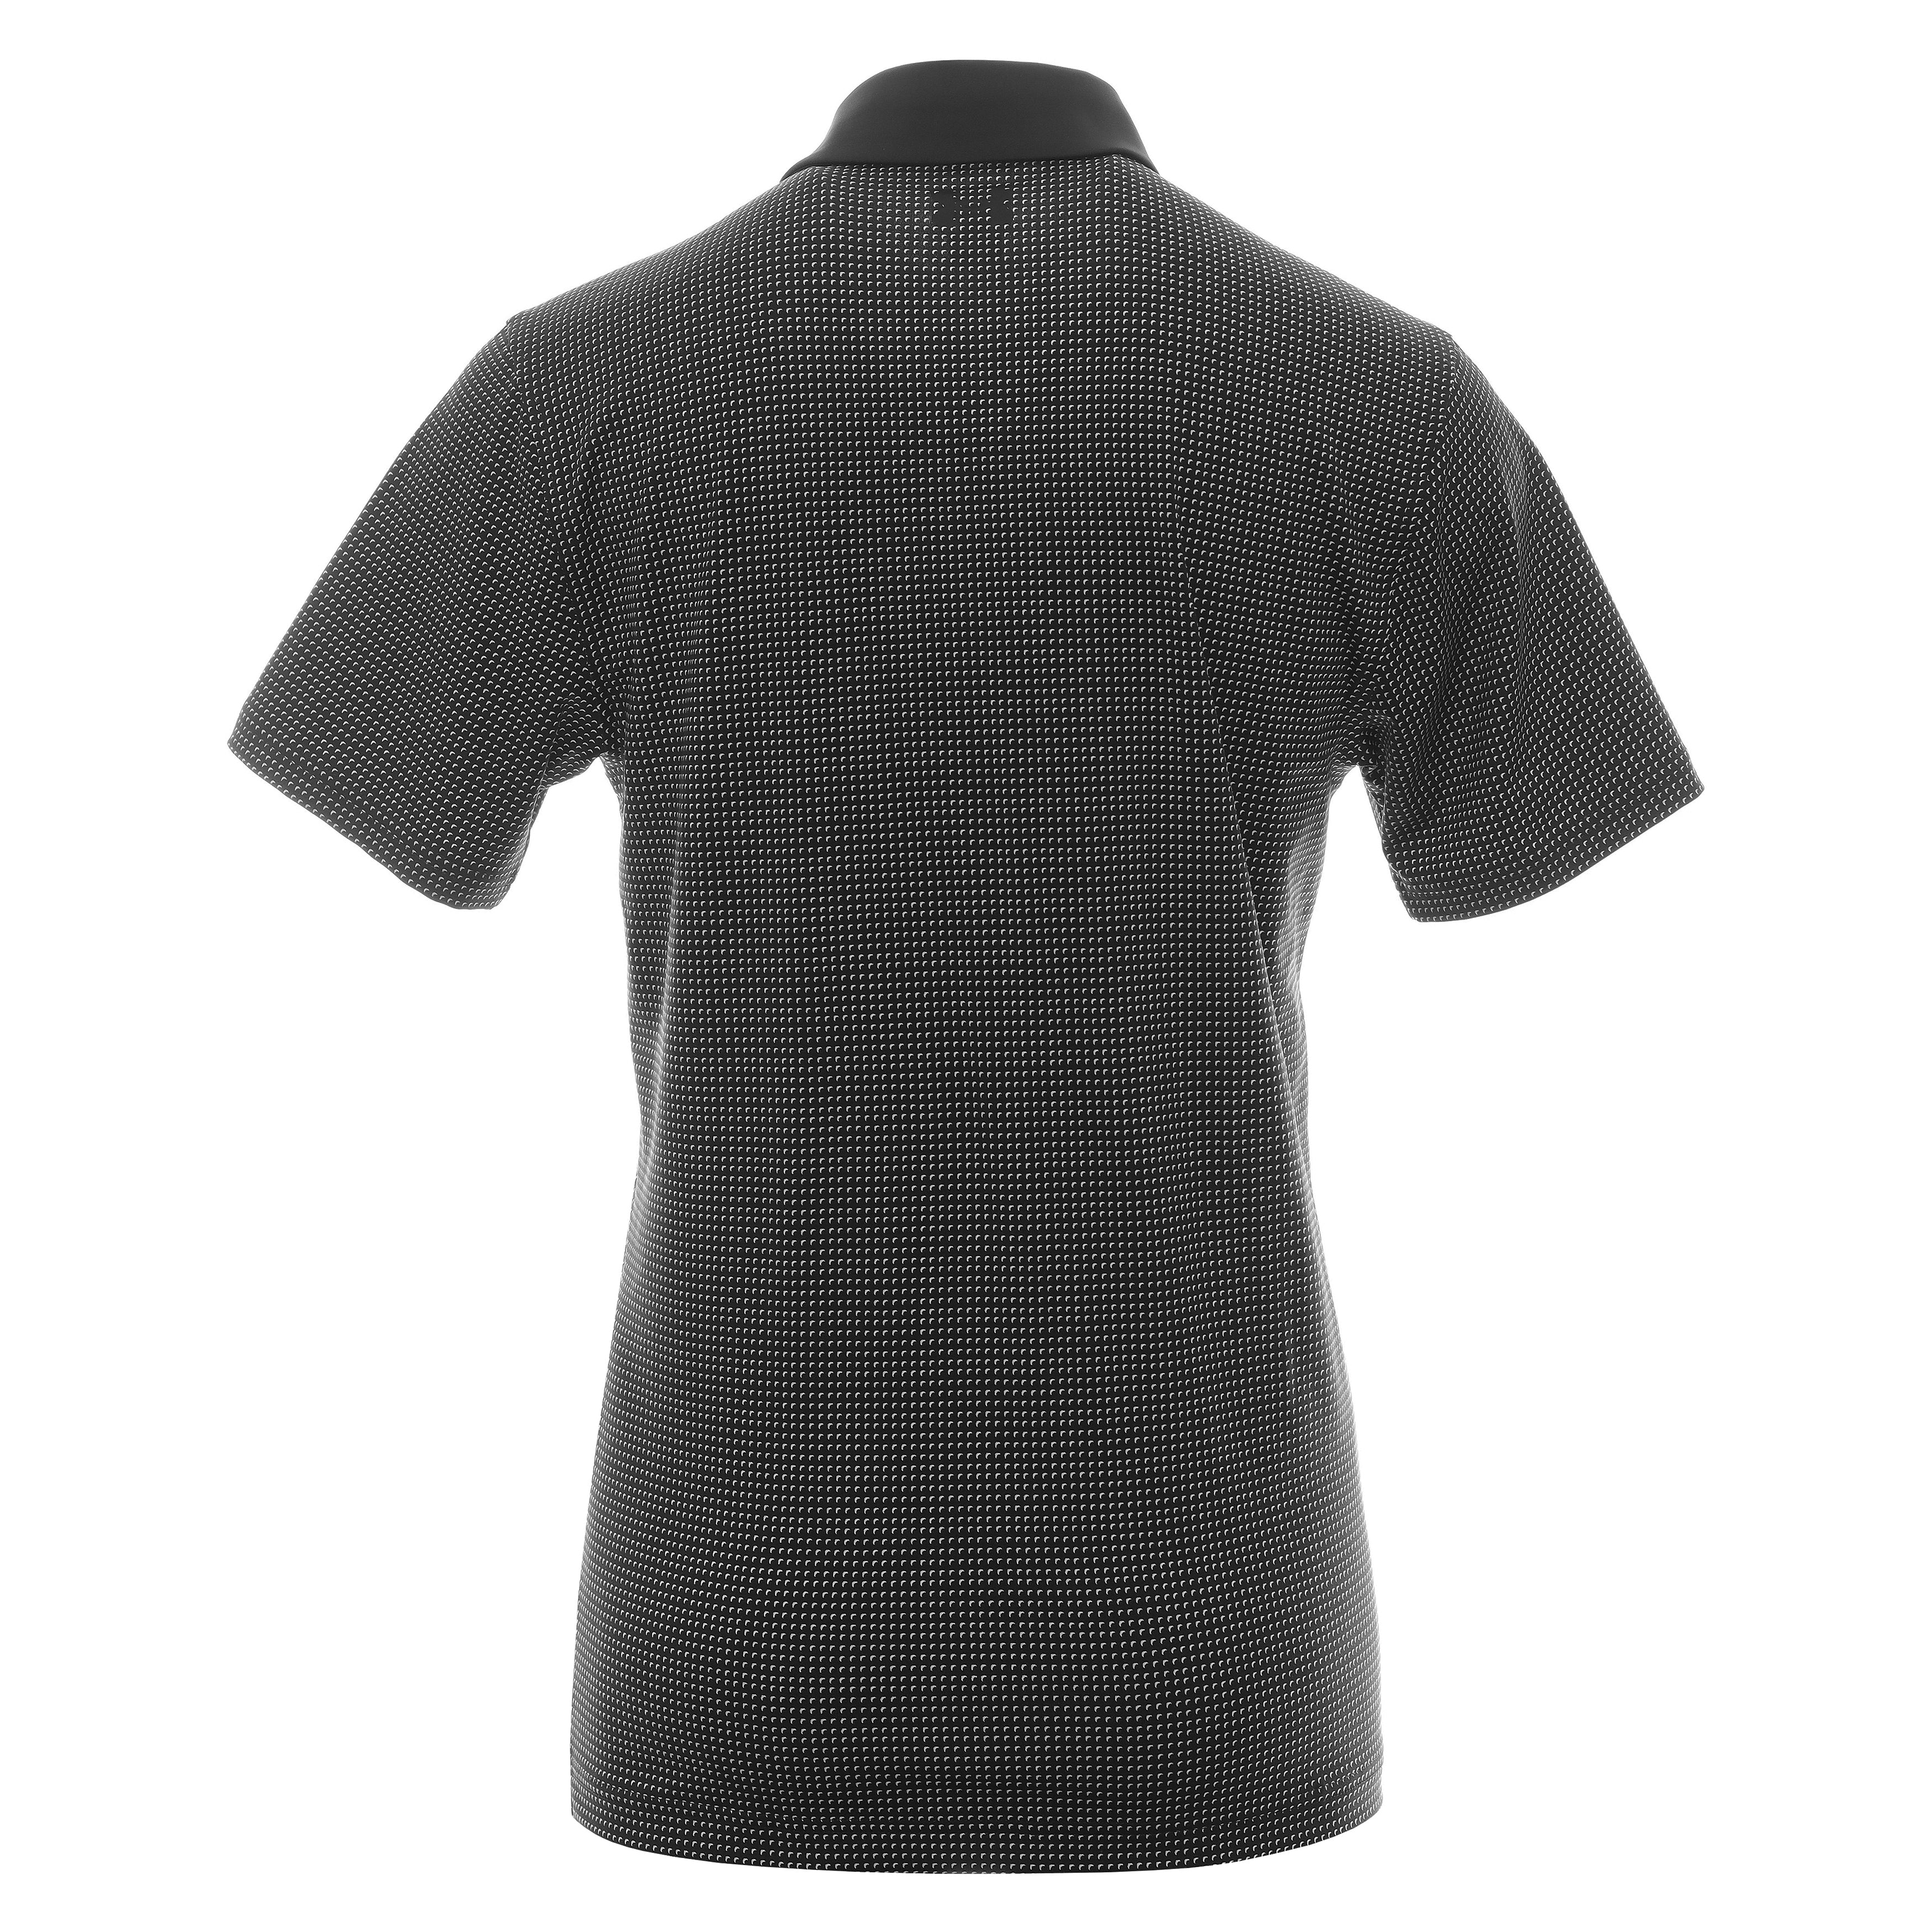 Under Armour Golf T2G Printed Shirt 1377380 Black White 001 ...